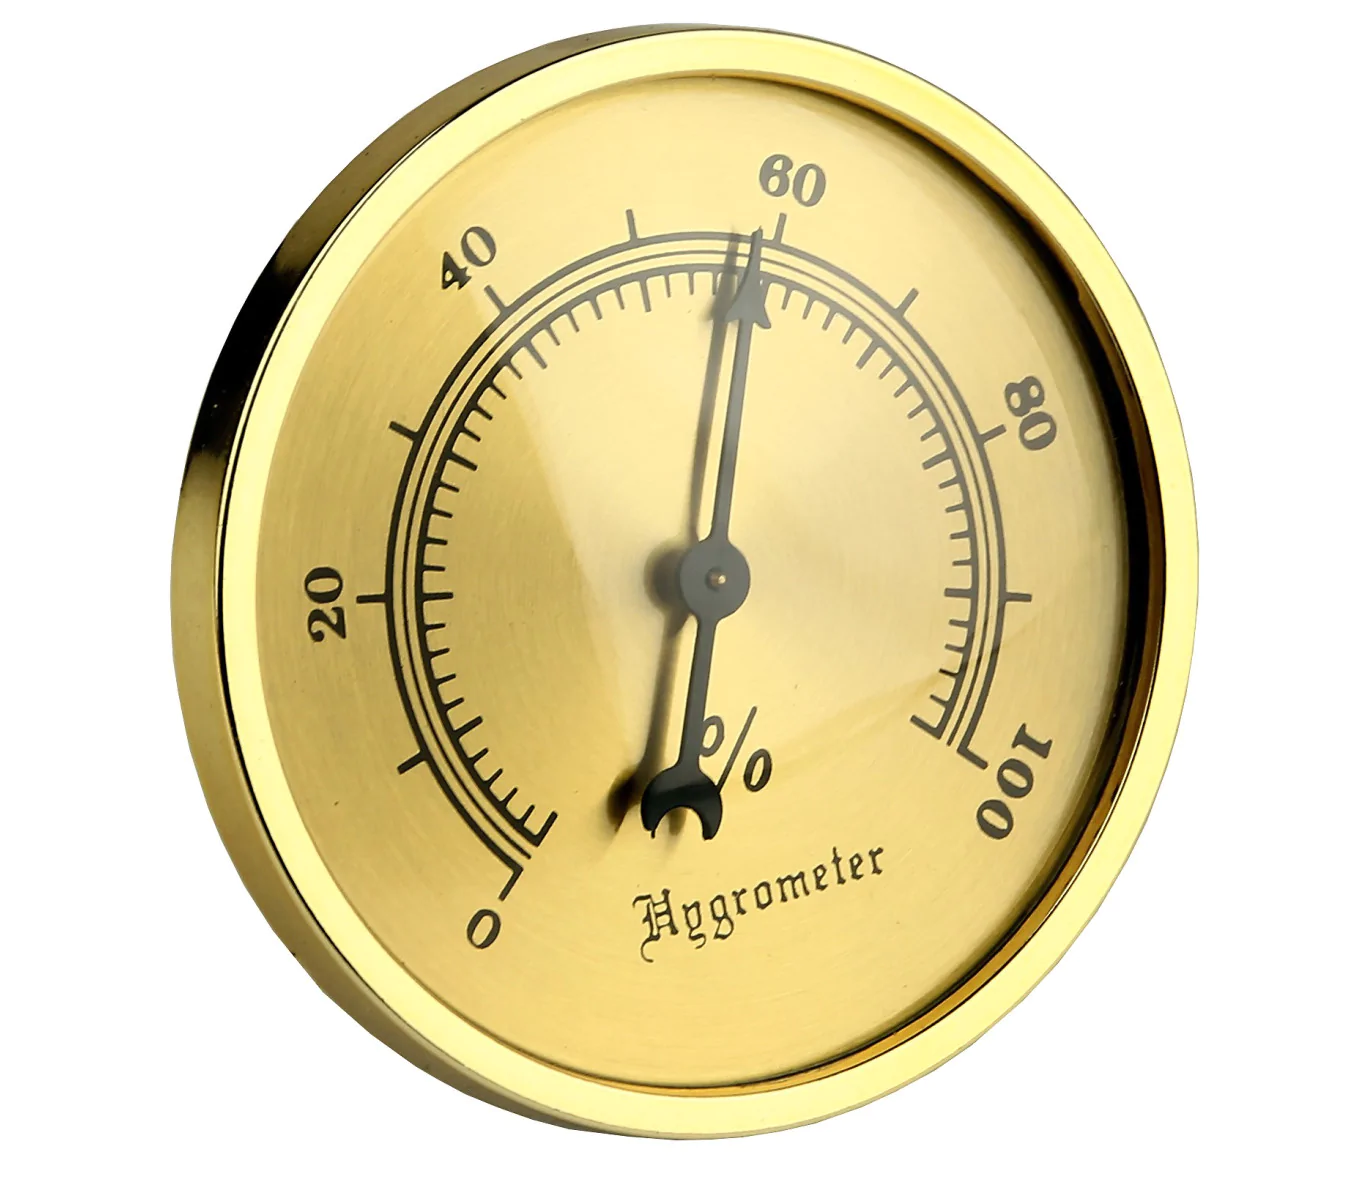 Hygrometer Basic Large | Buy online at lowest price